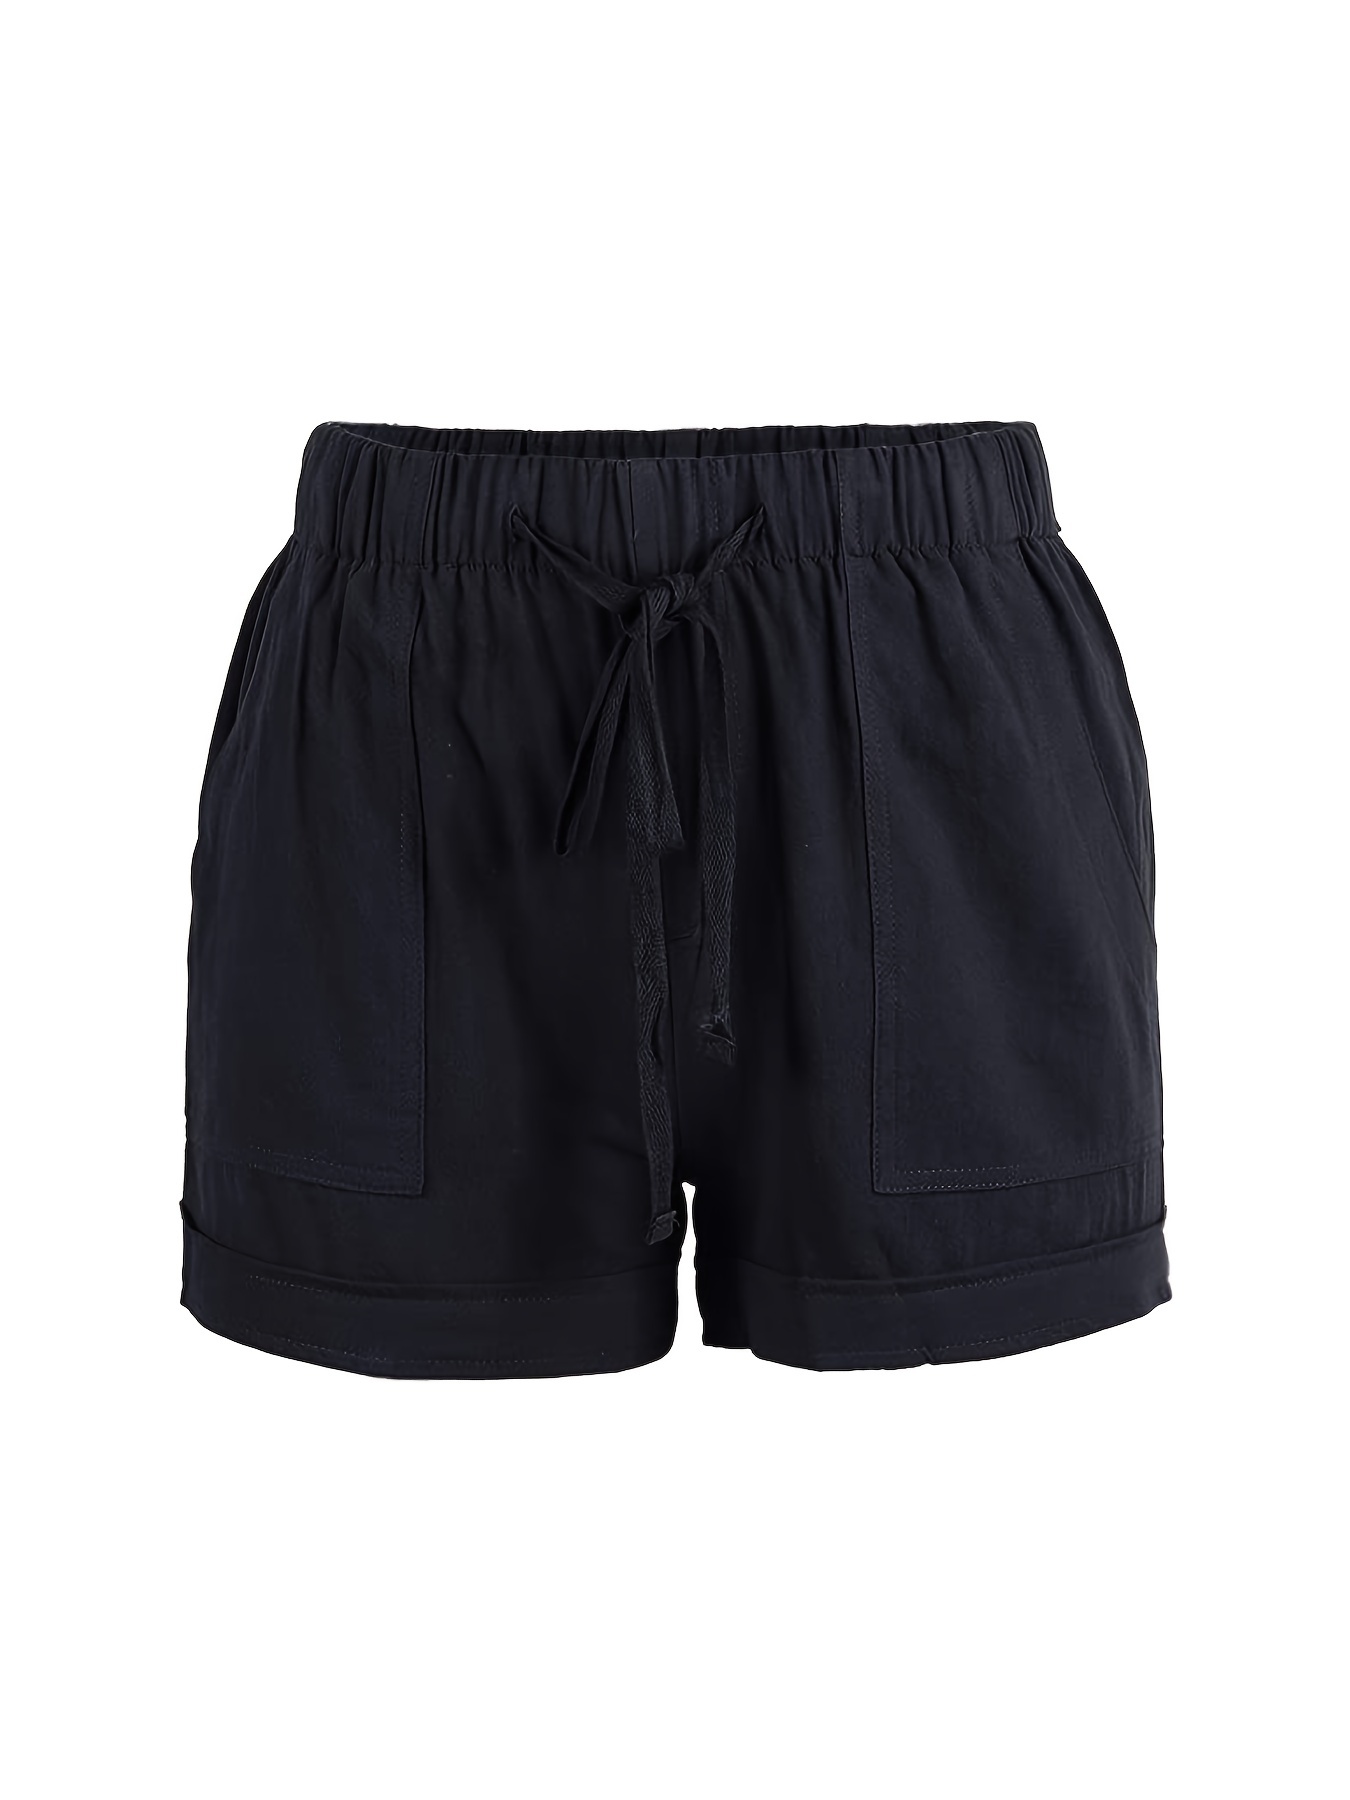 CAICJ98 Womens Shorts Womens Shorts Casual Summer Athletic Shorts Elastic  Comfy Shorts High Waist Pockets Black,S 